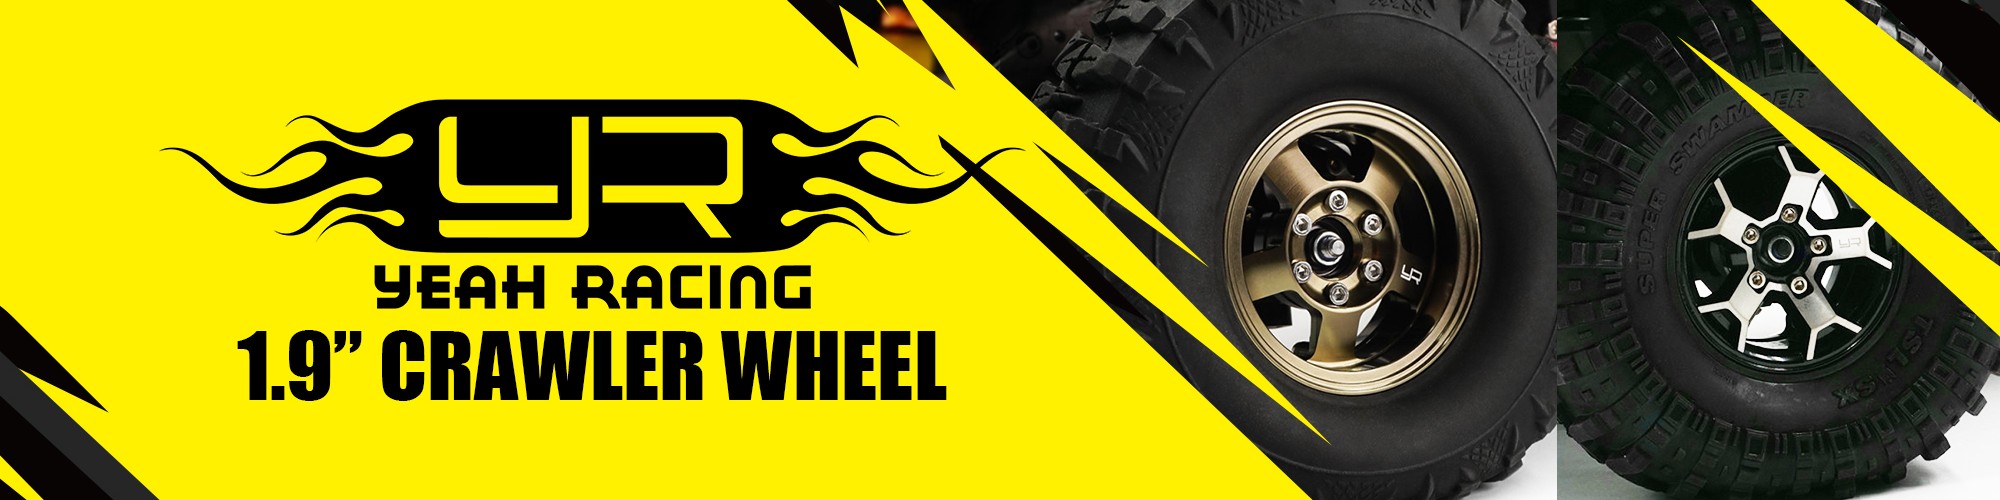 yeah racing 1.9 crawler wheel